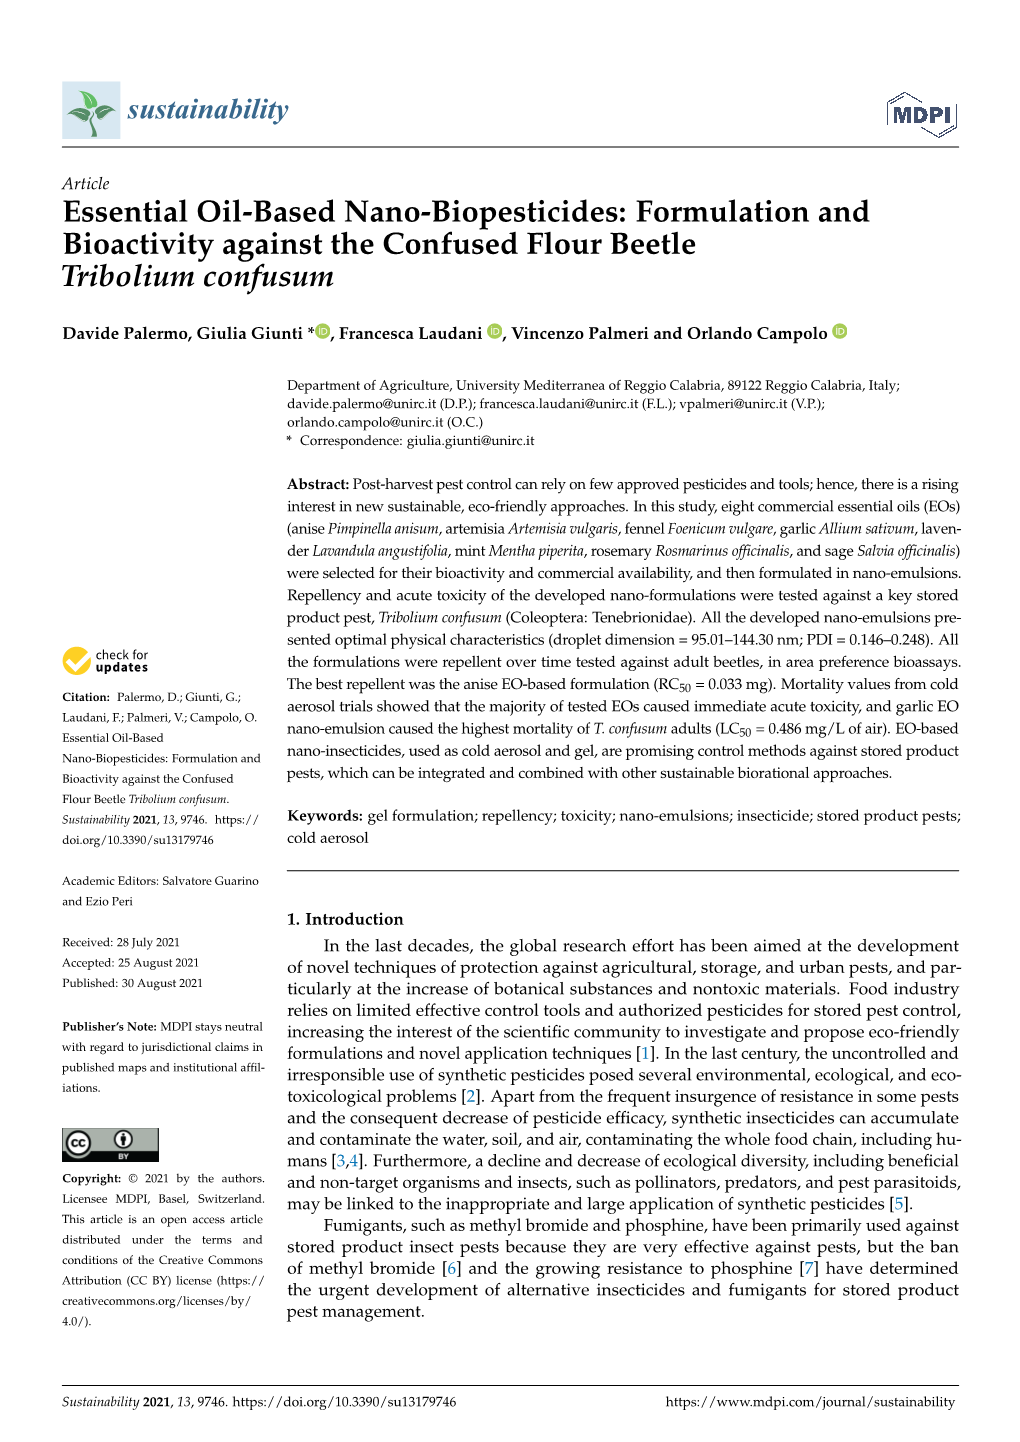 Essential Oil-Based Nano-Biopesticides: Formulation and Bioactivity Against the Confused Flour Beetle Tribolium Confusum